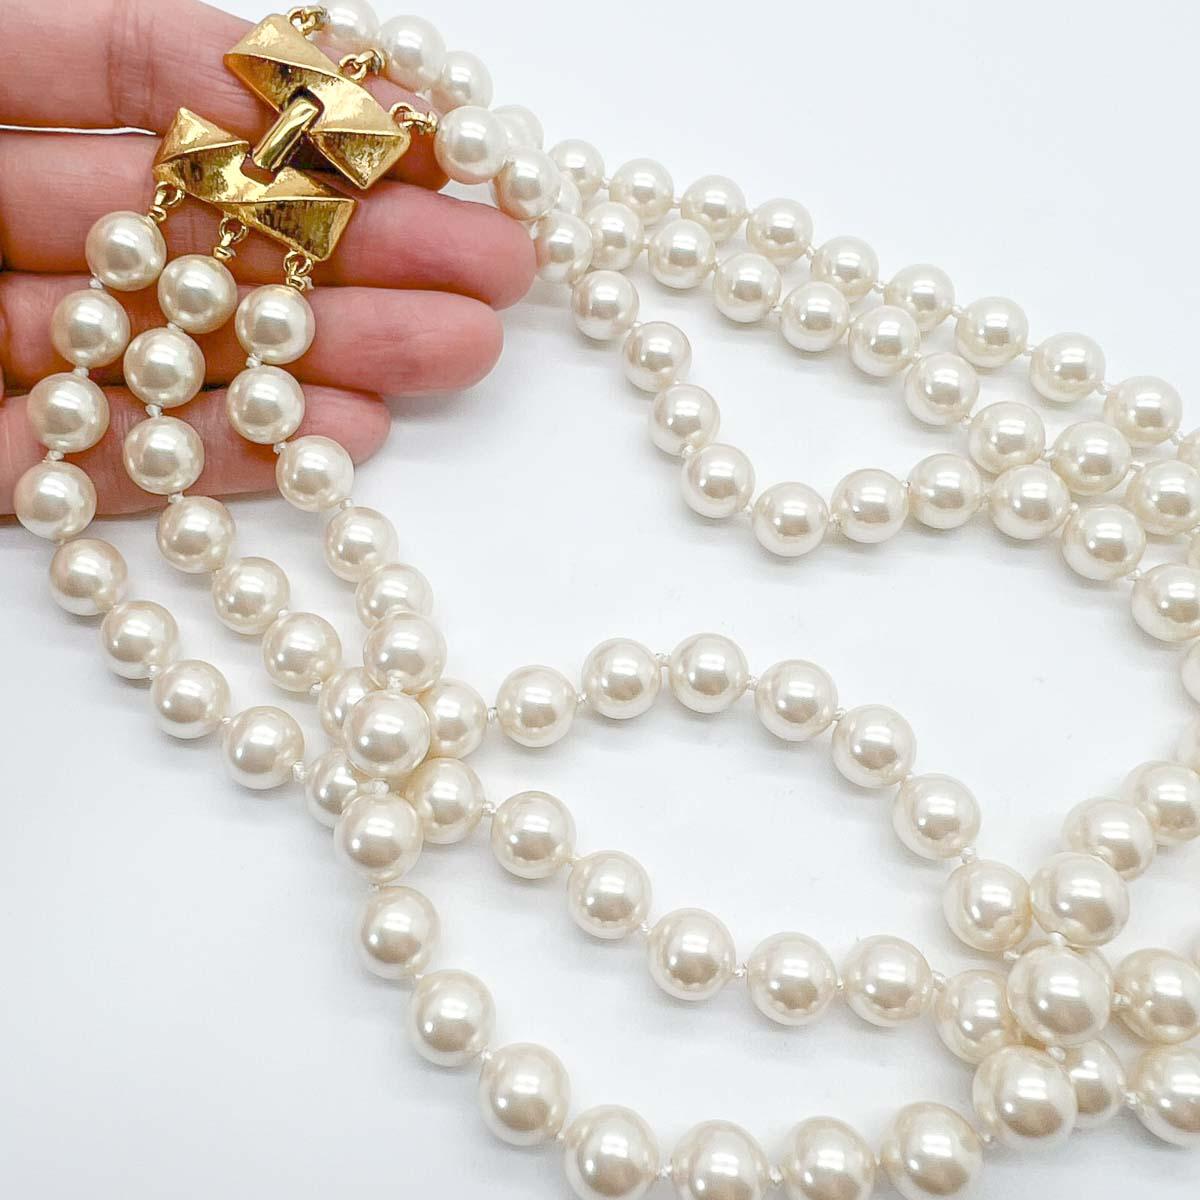 monet pearls value